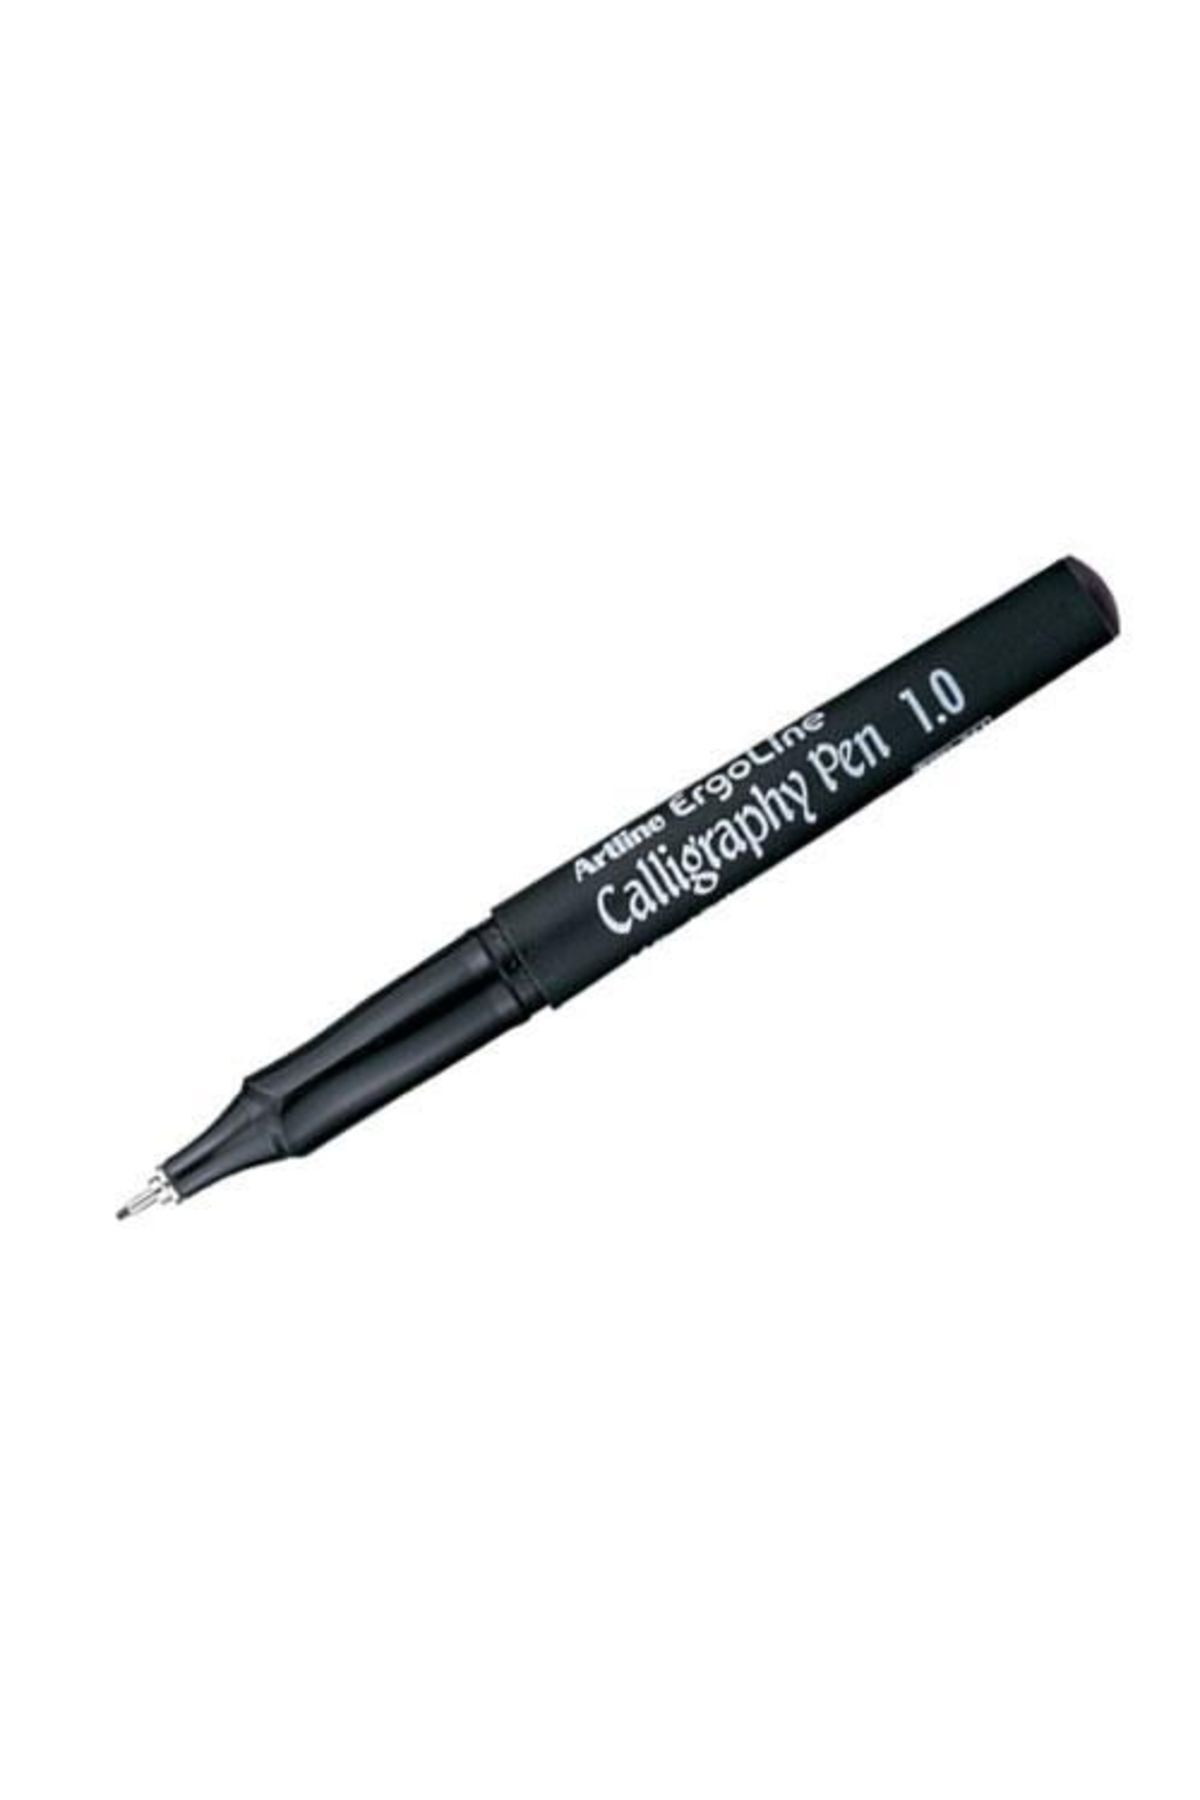 artline Supreme Calıgraphy Pen 1.0 Kahverengi